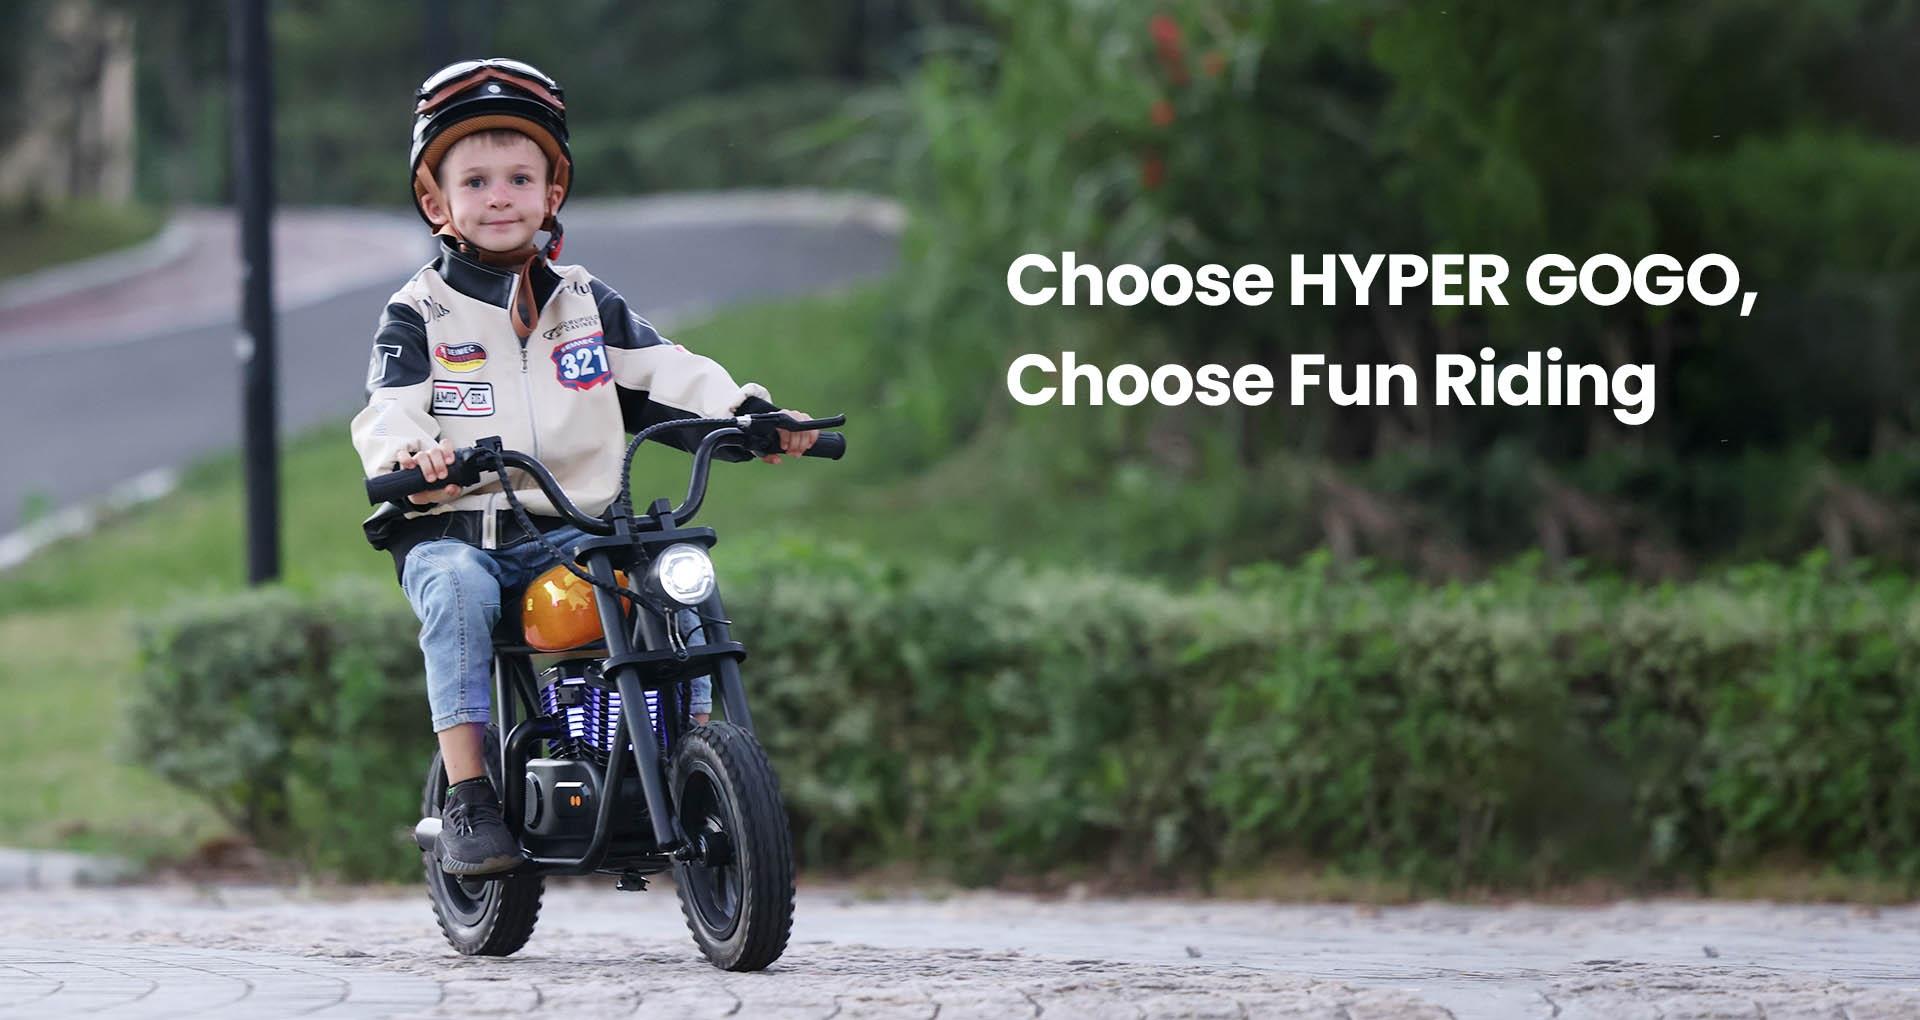 HYPER GOGO Pioneer 12 Plus Electric Chopper Motorcycle for Kids, 21.9V 5.2Ah 160W, 12x3 Tires, 12KM - Black